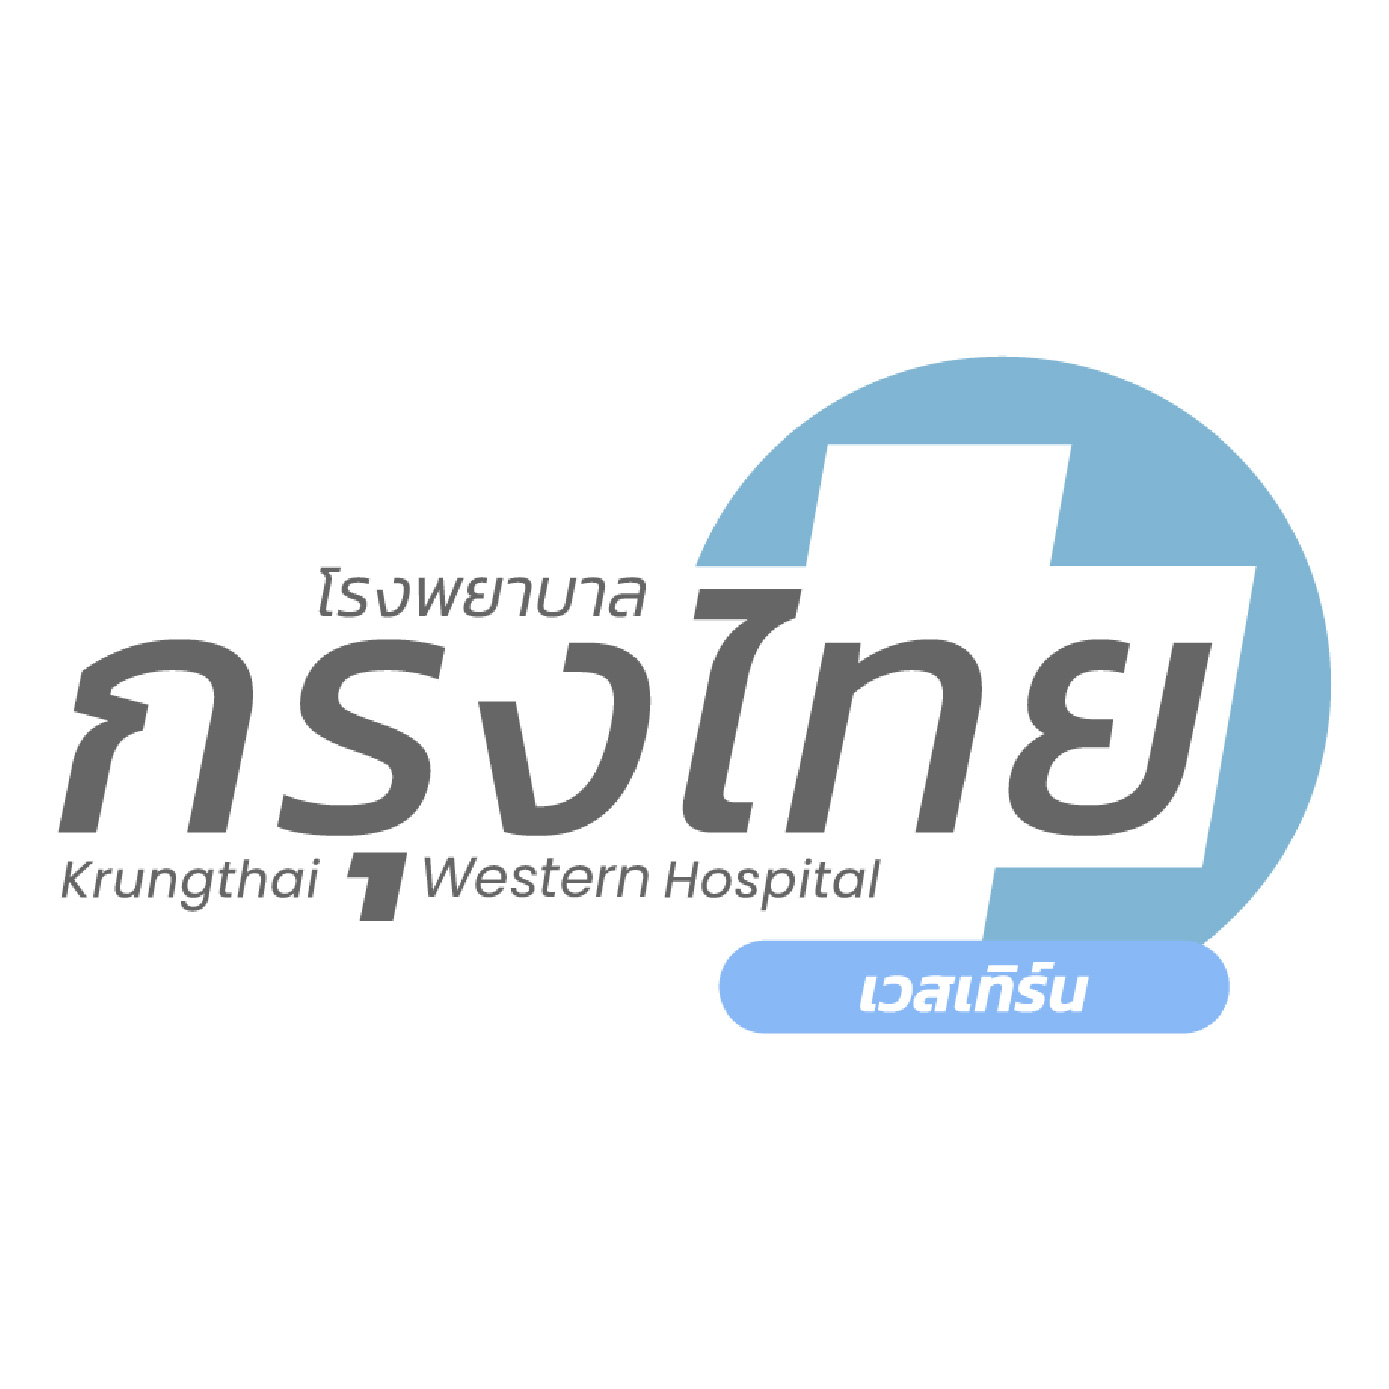 Krungthai Western Hospital 01